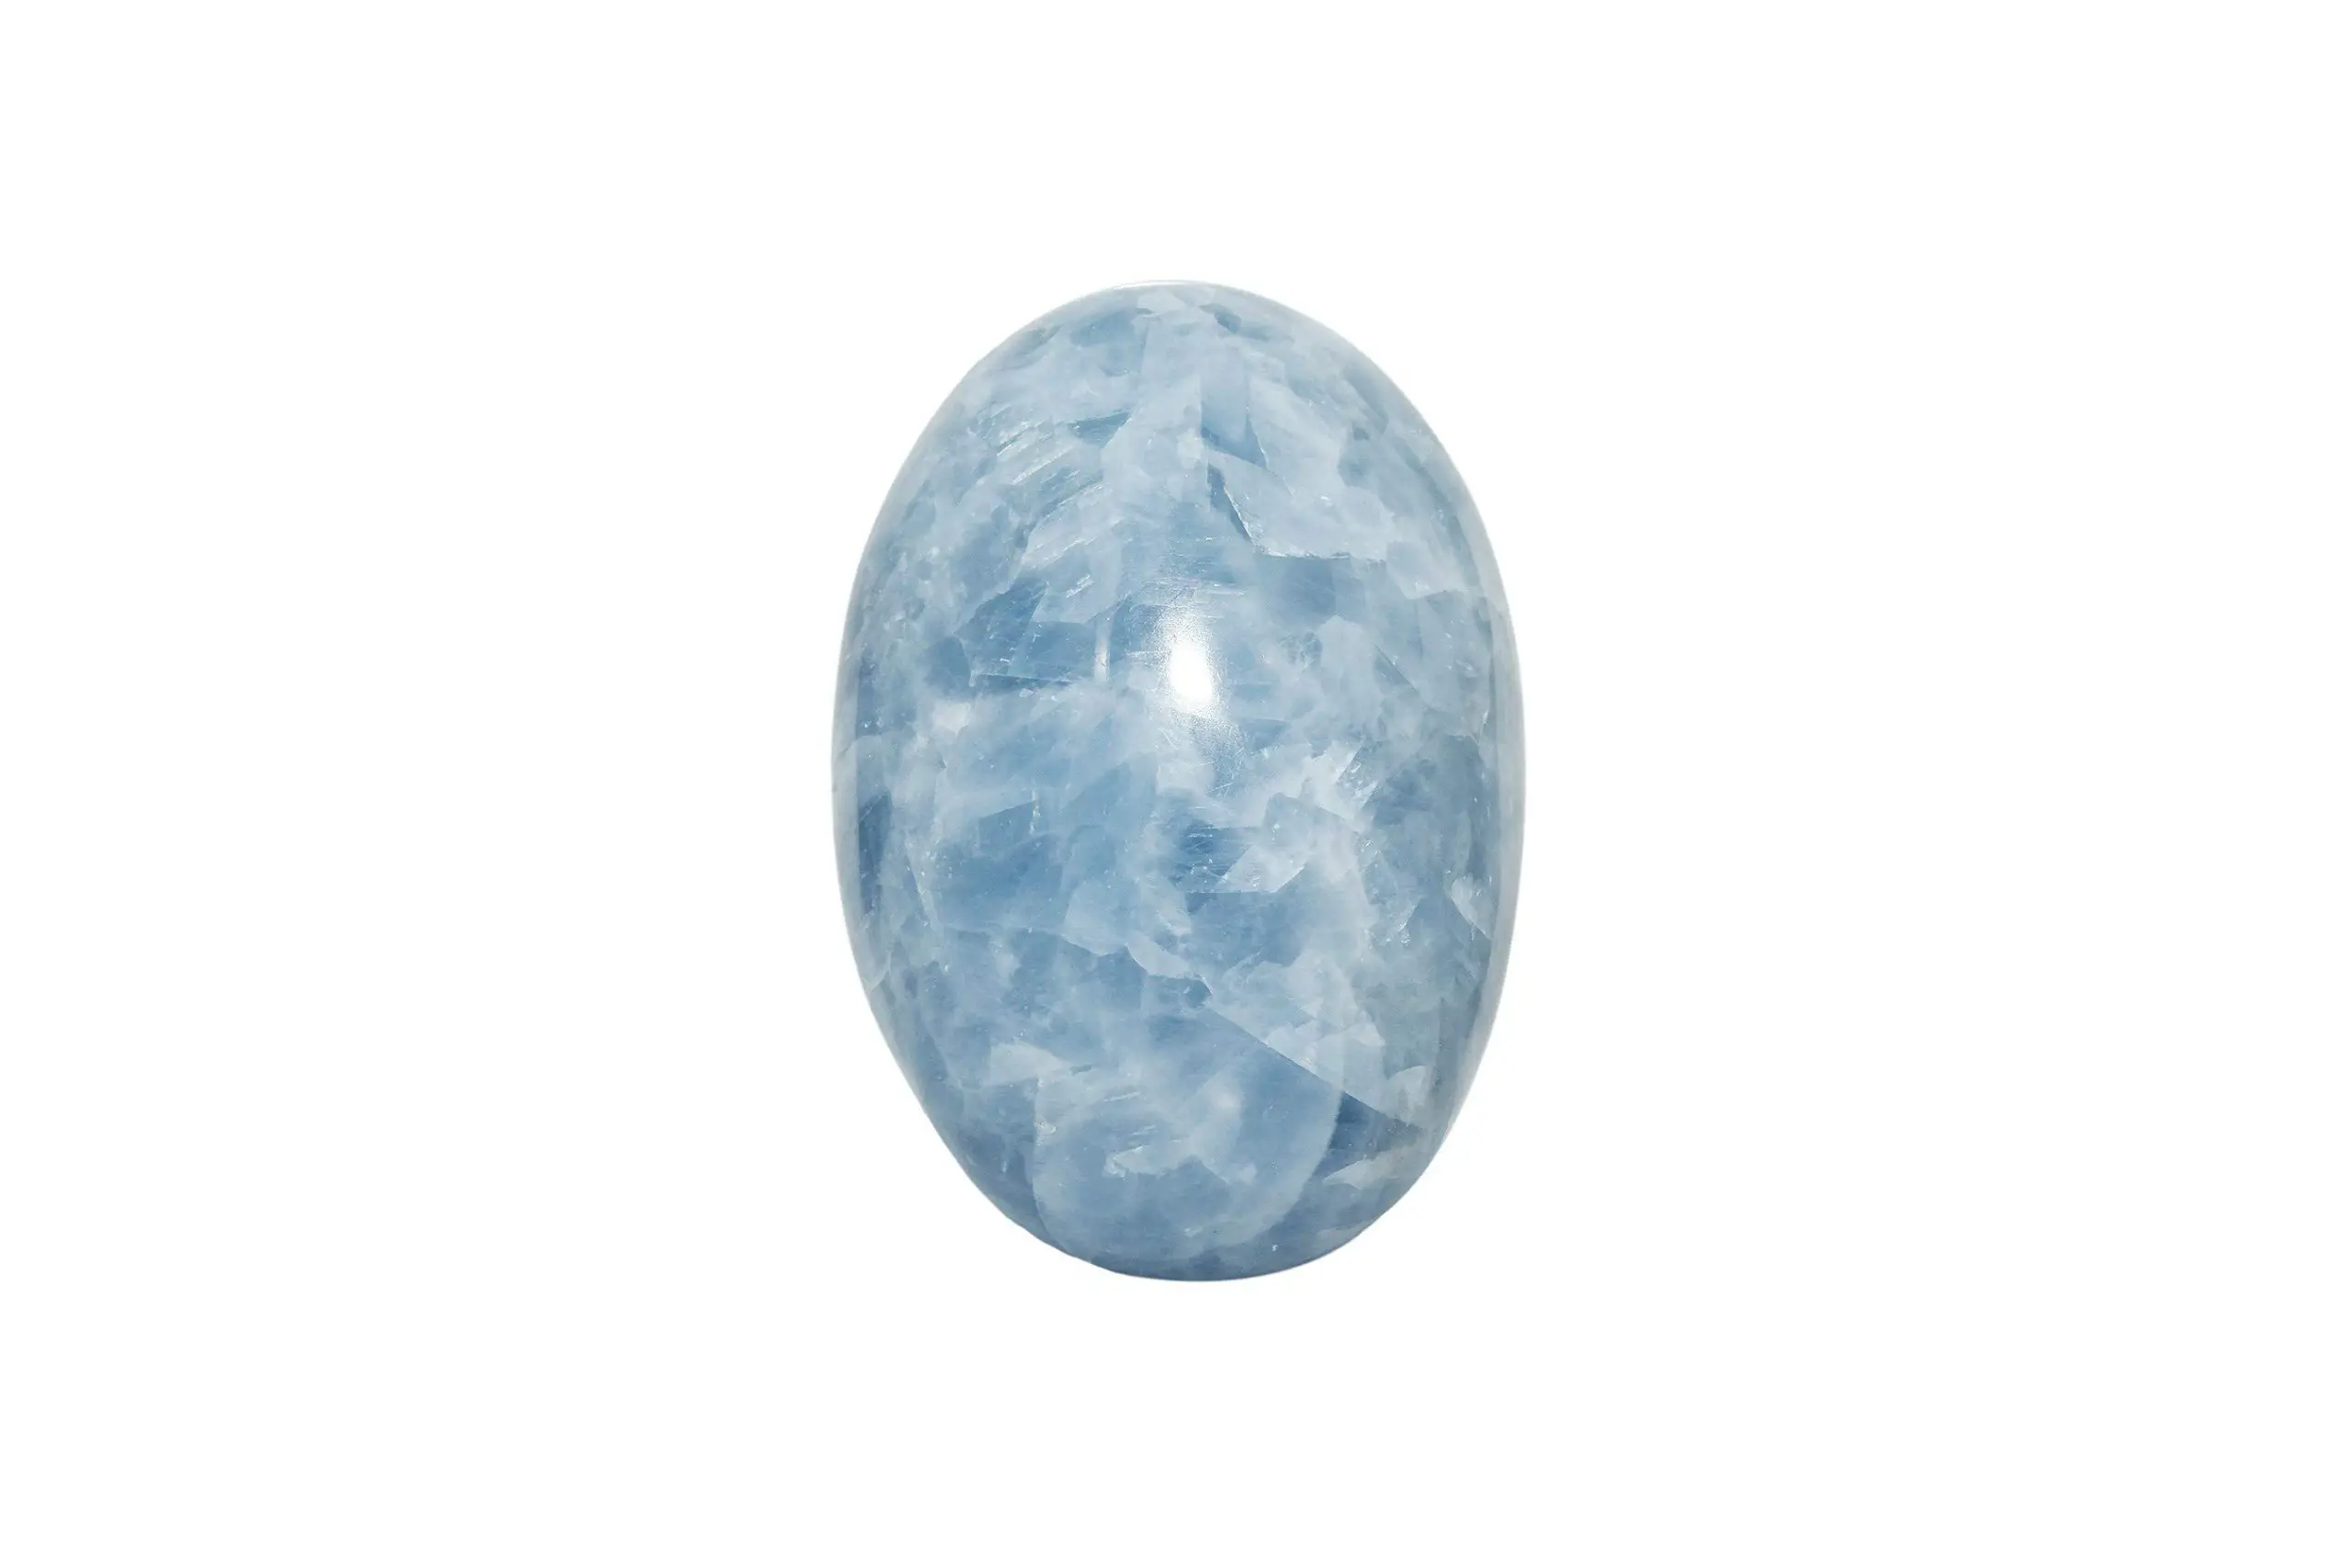 Natural blue point stone quartz moon shape crystal hand-polished healing 5pc 